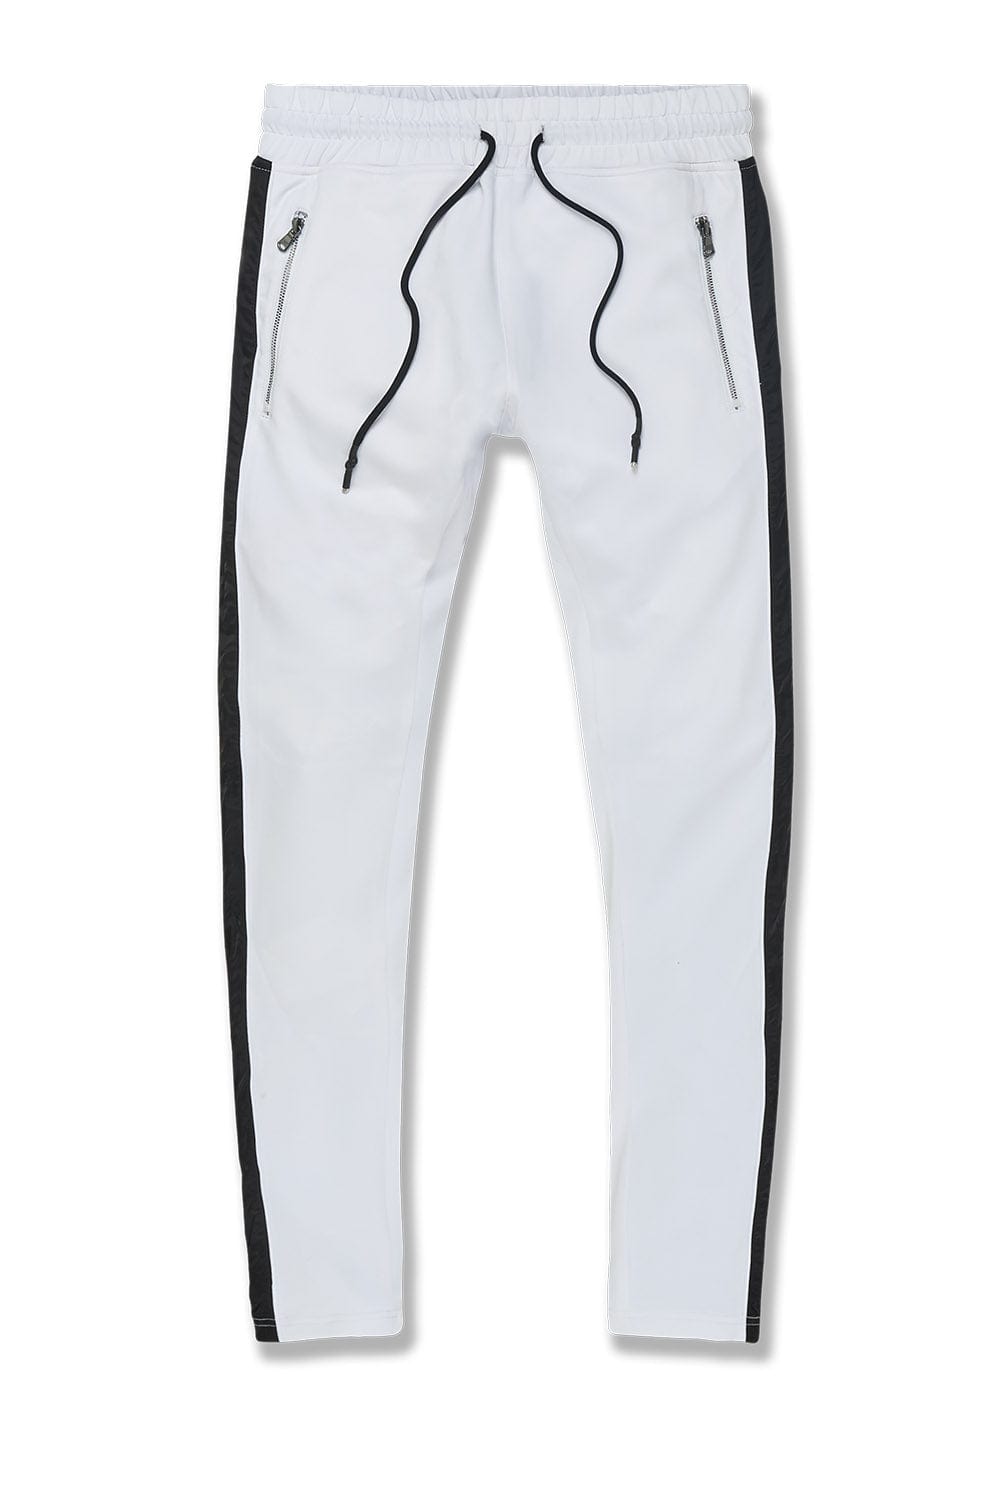 Jordan Craig Trenton Track Pants (Domino) S / Domino